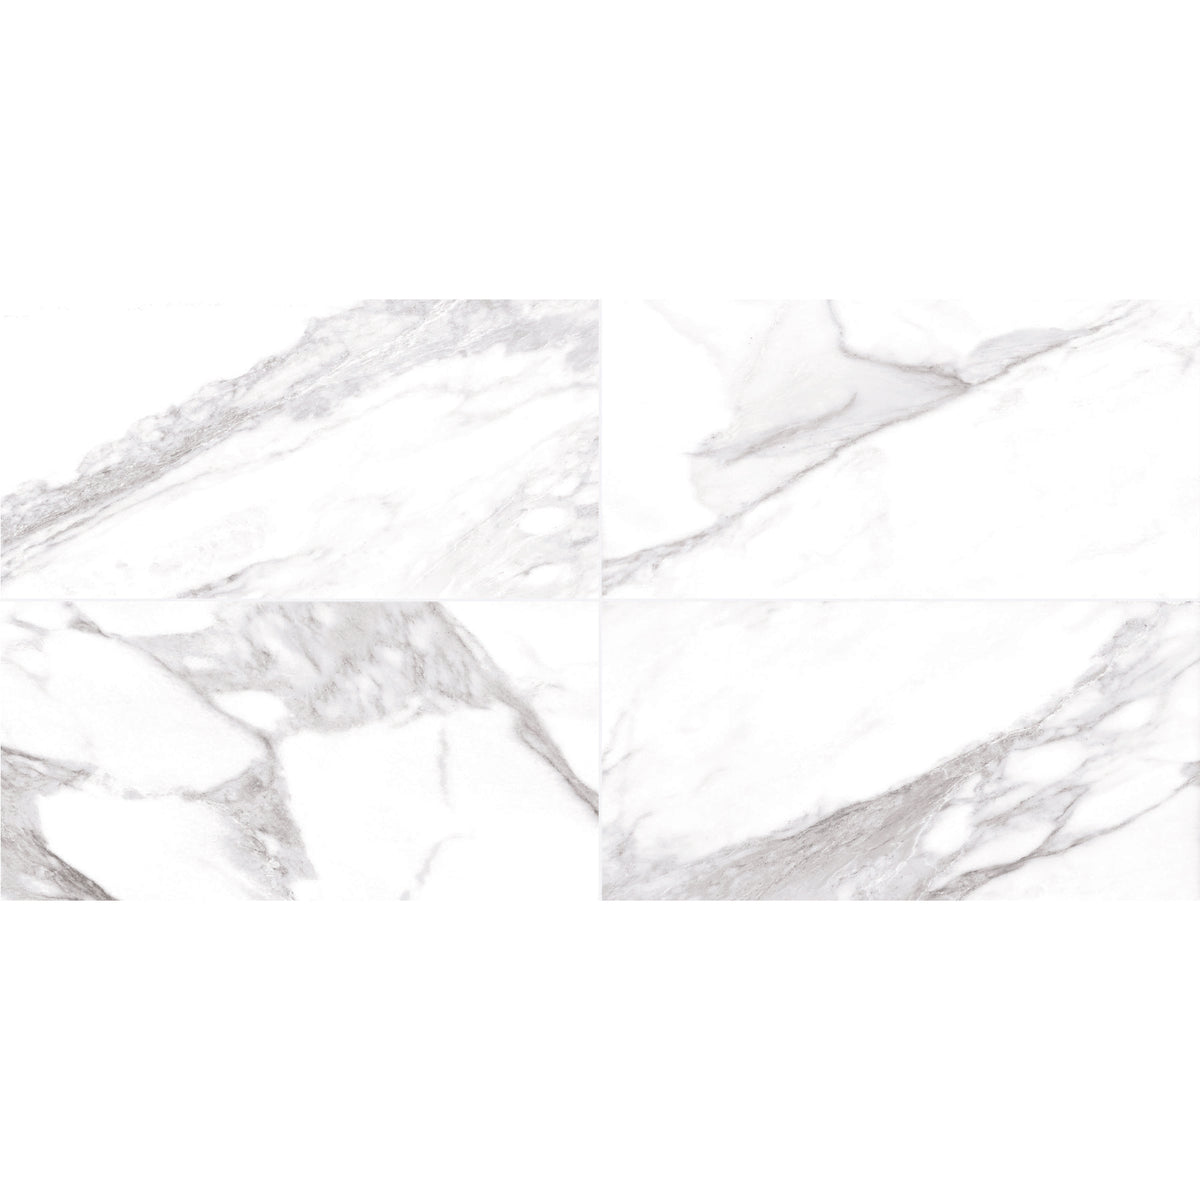 Daltile - Perpetuo - 12 in. x 24 in. Glazed Porcelain Floor Tile - Brilliant White Matte Variation